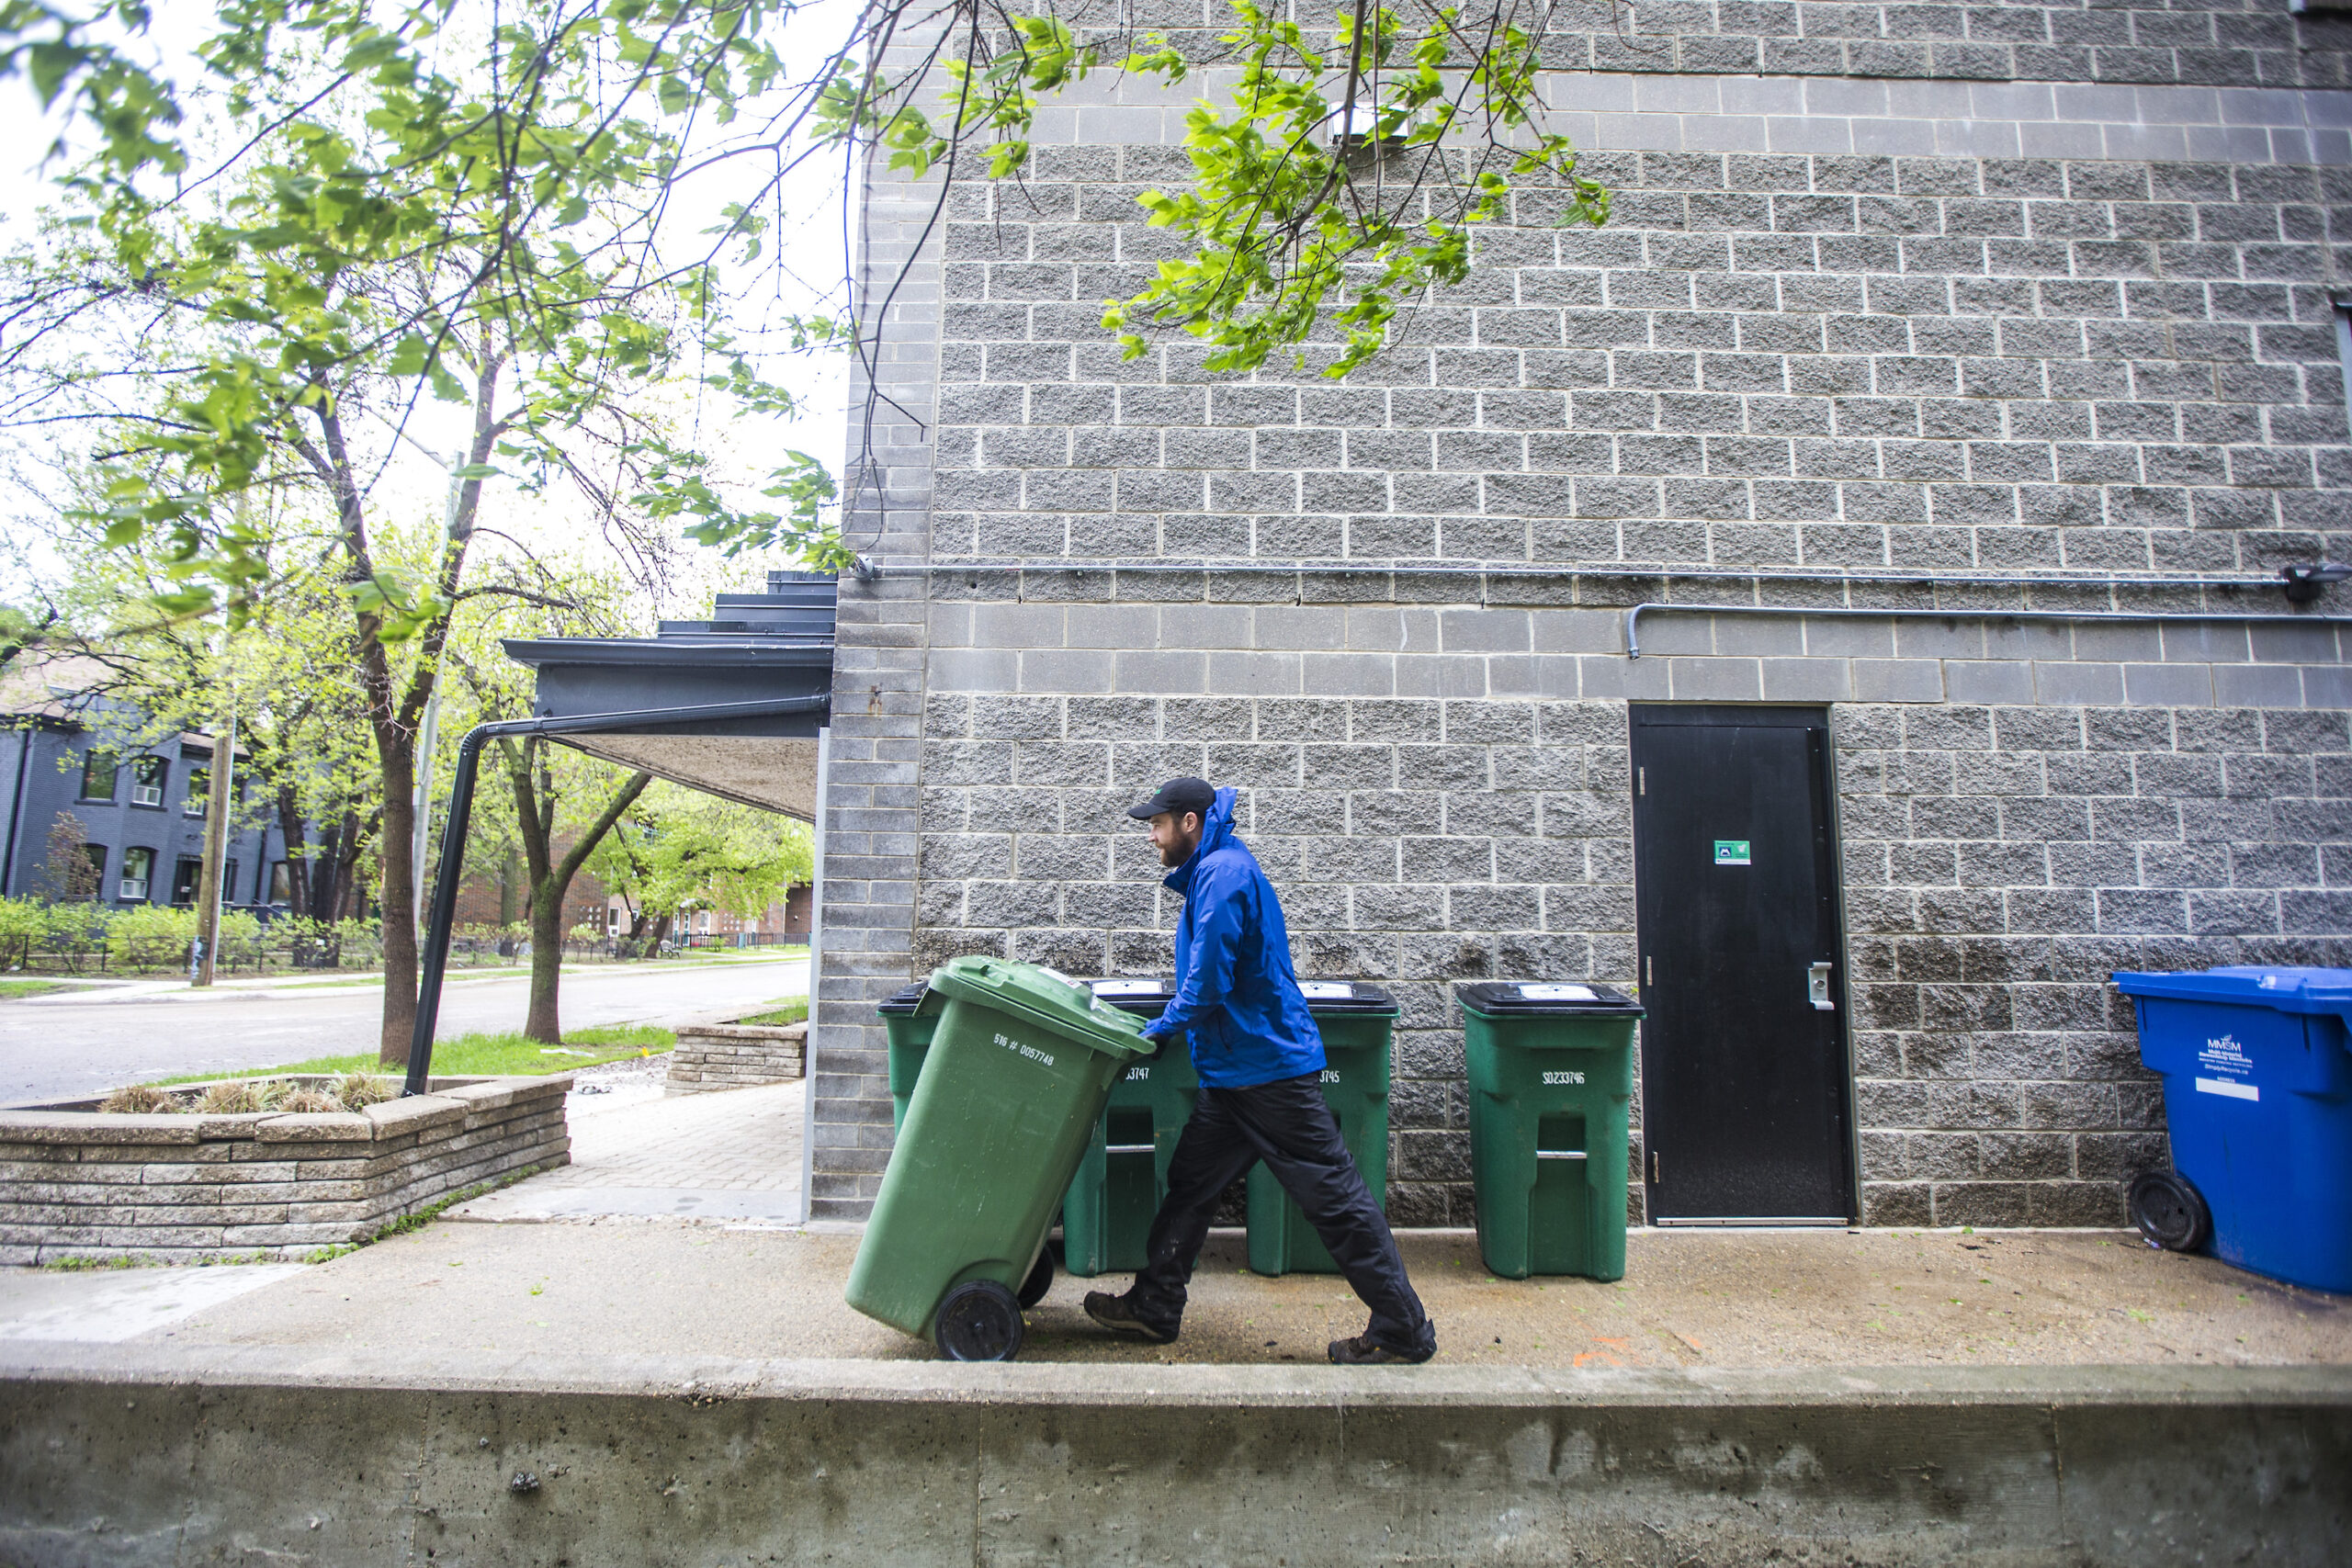 Garrett LeBlanc wheels a green compost bin past a grey brick apartment complex on a rainy day